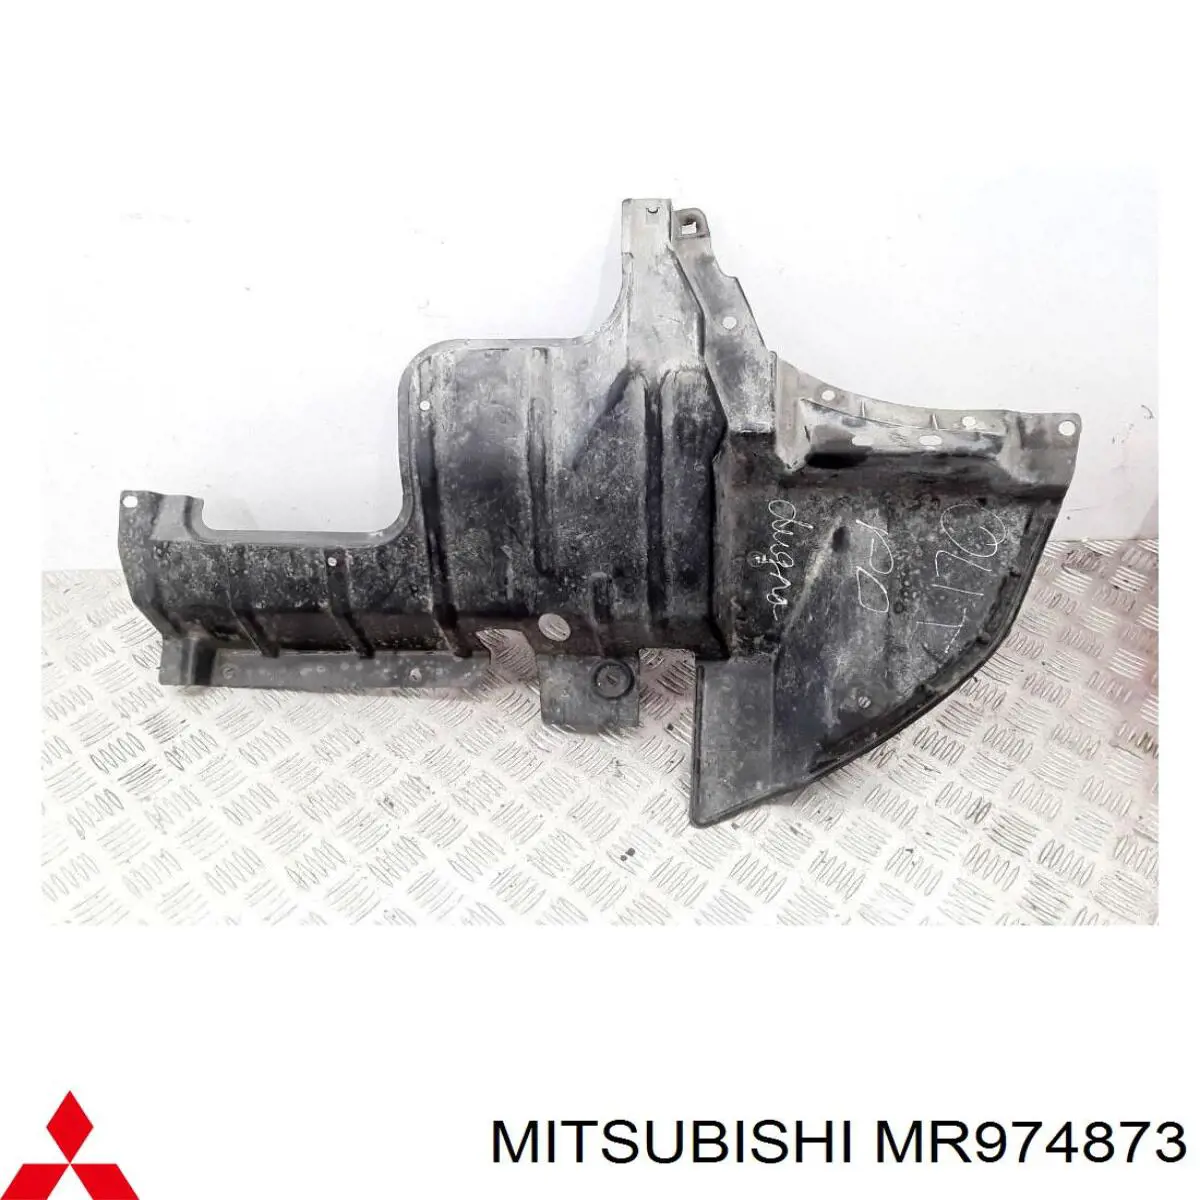 MR974873 Mitsubishi захист двигуна, правий